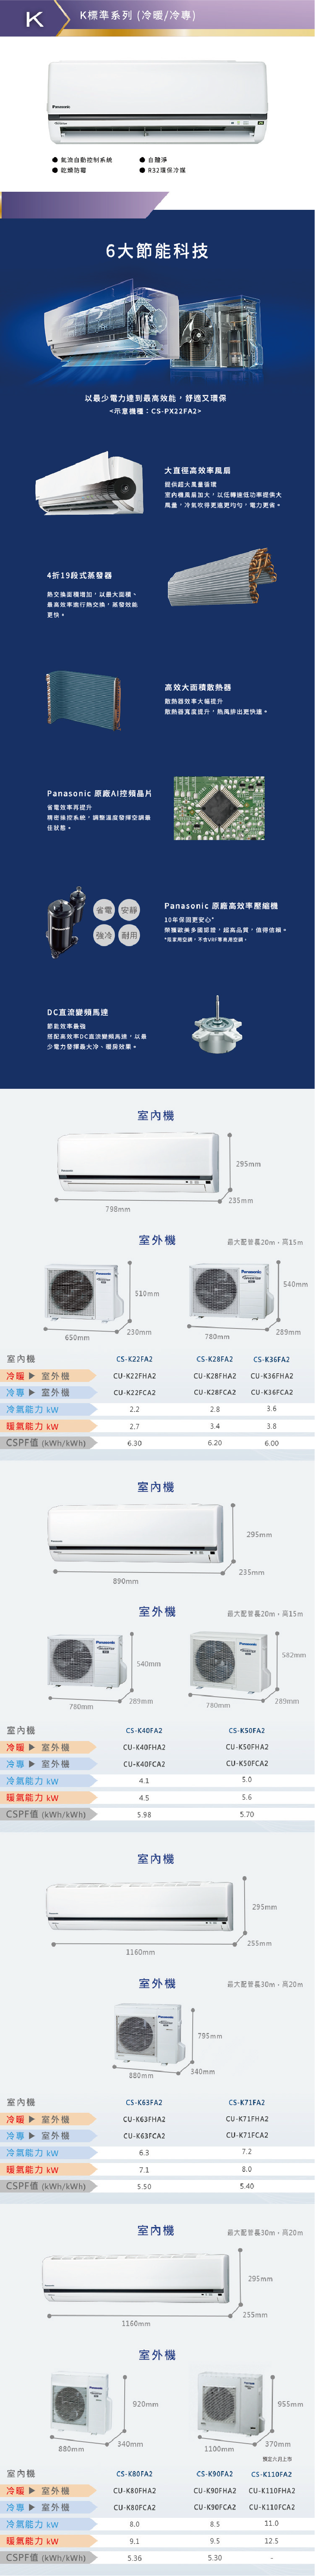 CU-K71FCA2 12坪適用 K系列 一對一 分離式 變頻 冷專 冷氣 CS-K71FA2